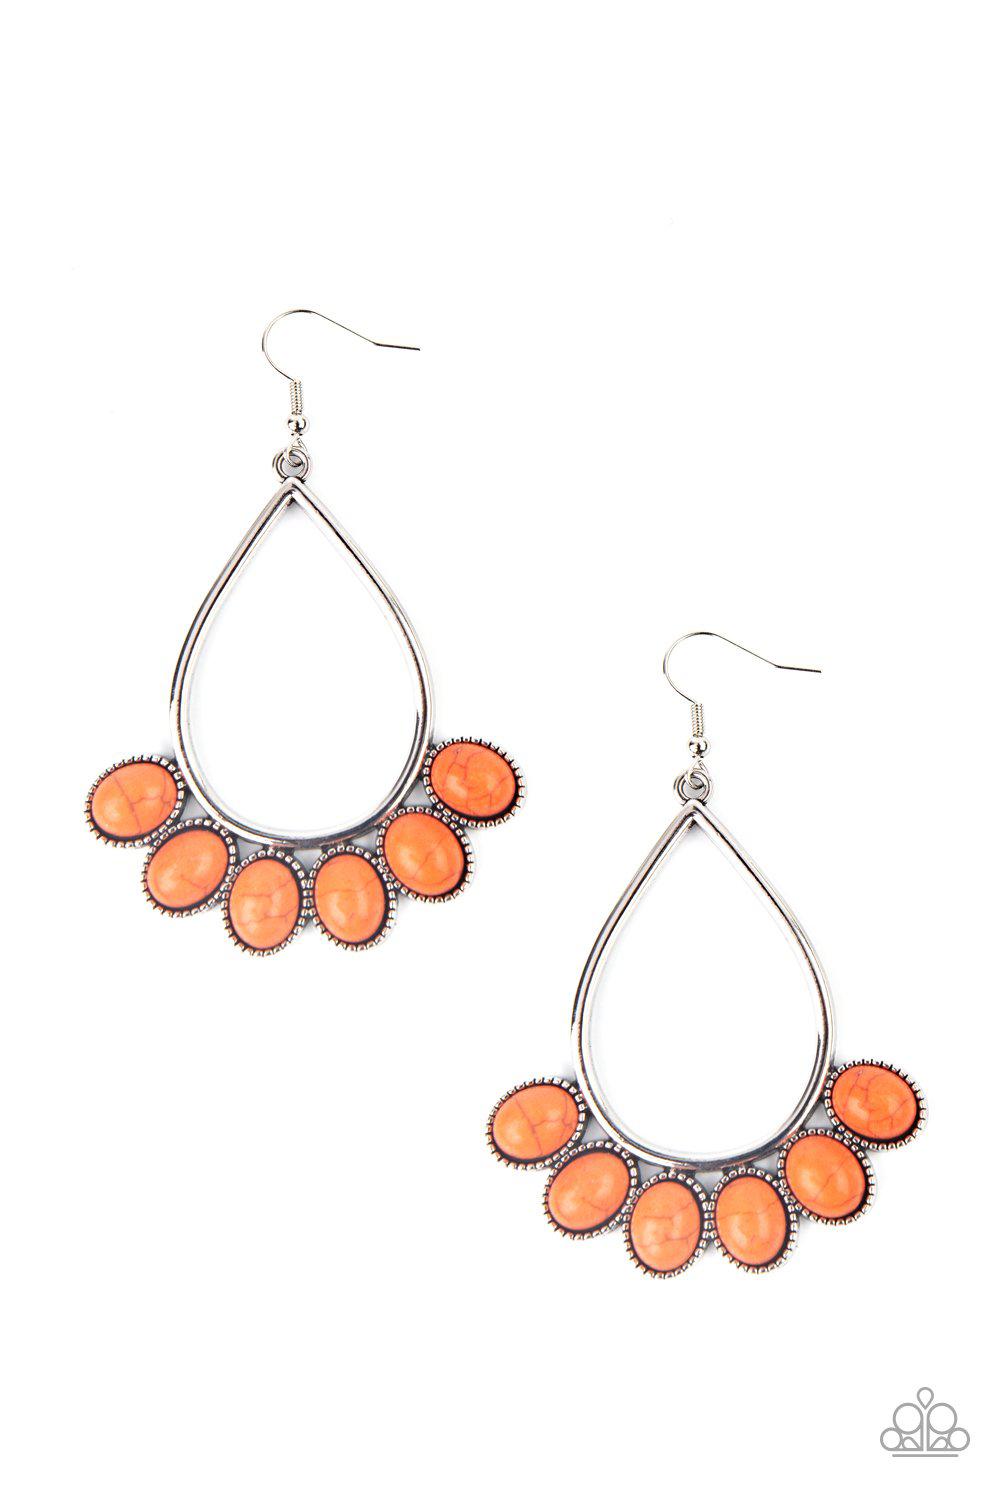 Stone Sky Orange Stone Earrings - Paparazzi Accessories - lightbox -CarasShop.com - $5 Jewelry by Cara Jewels